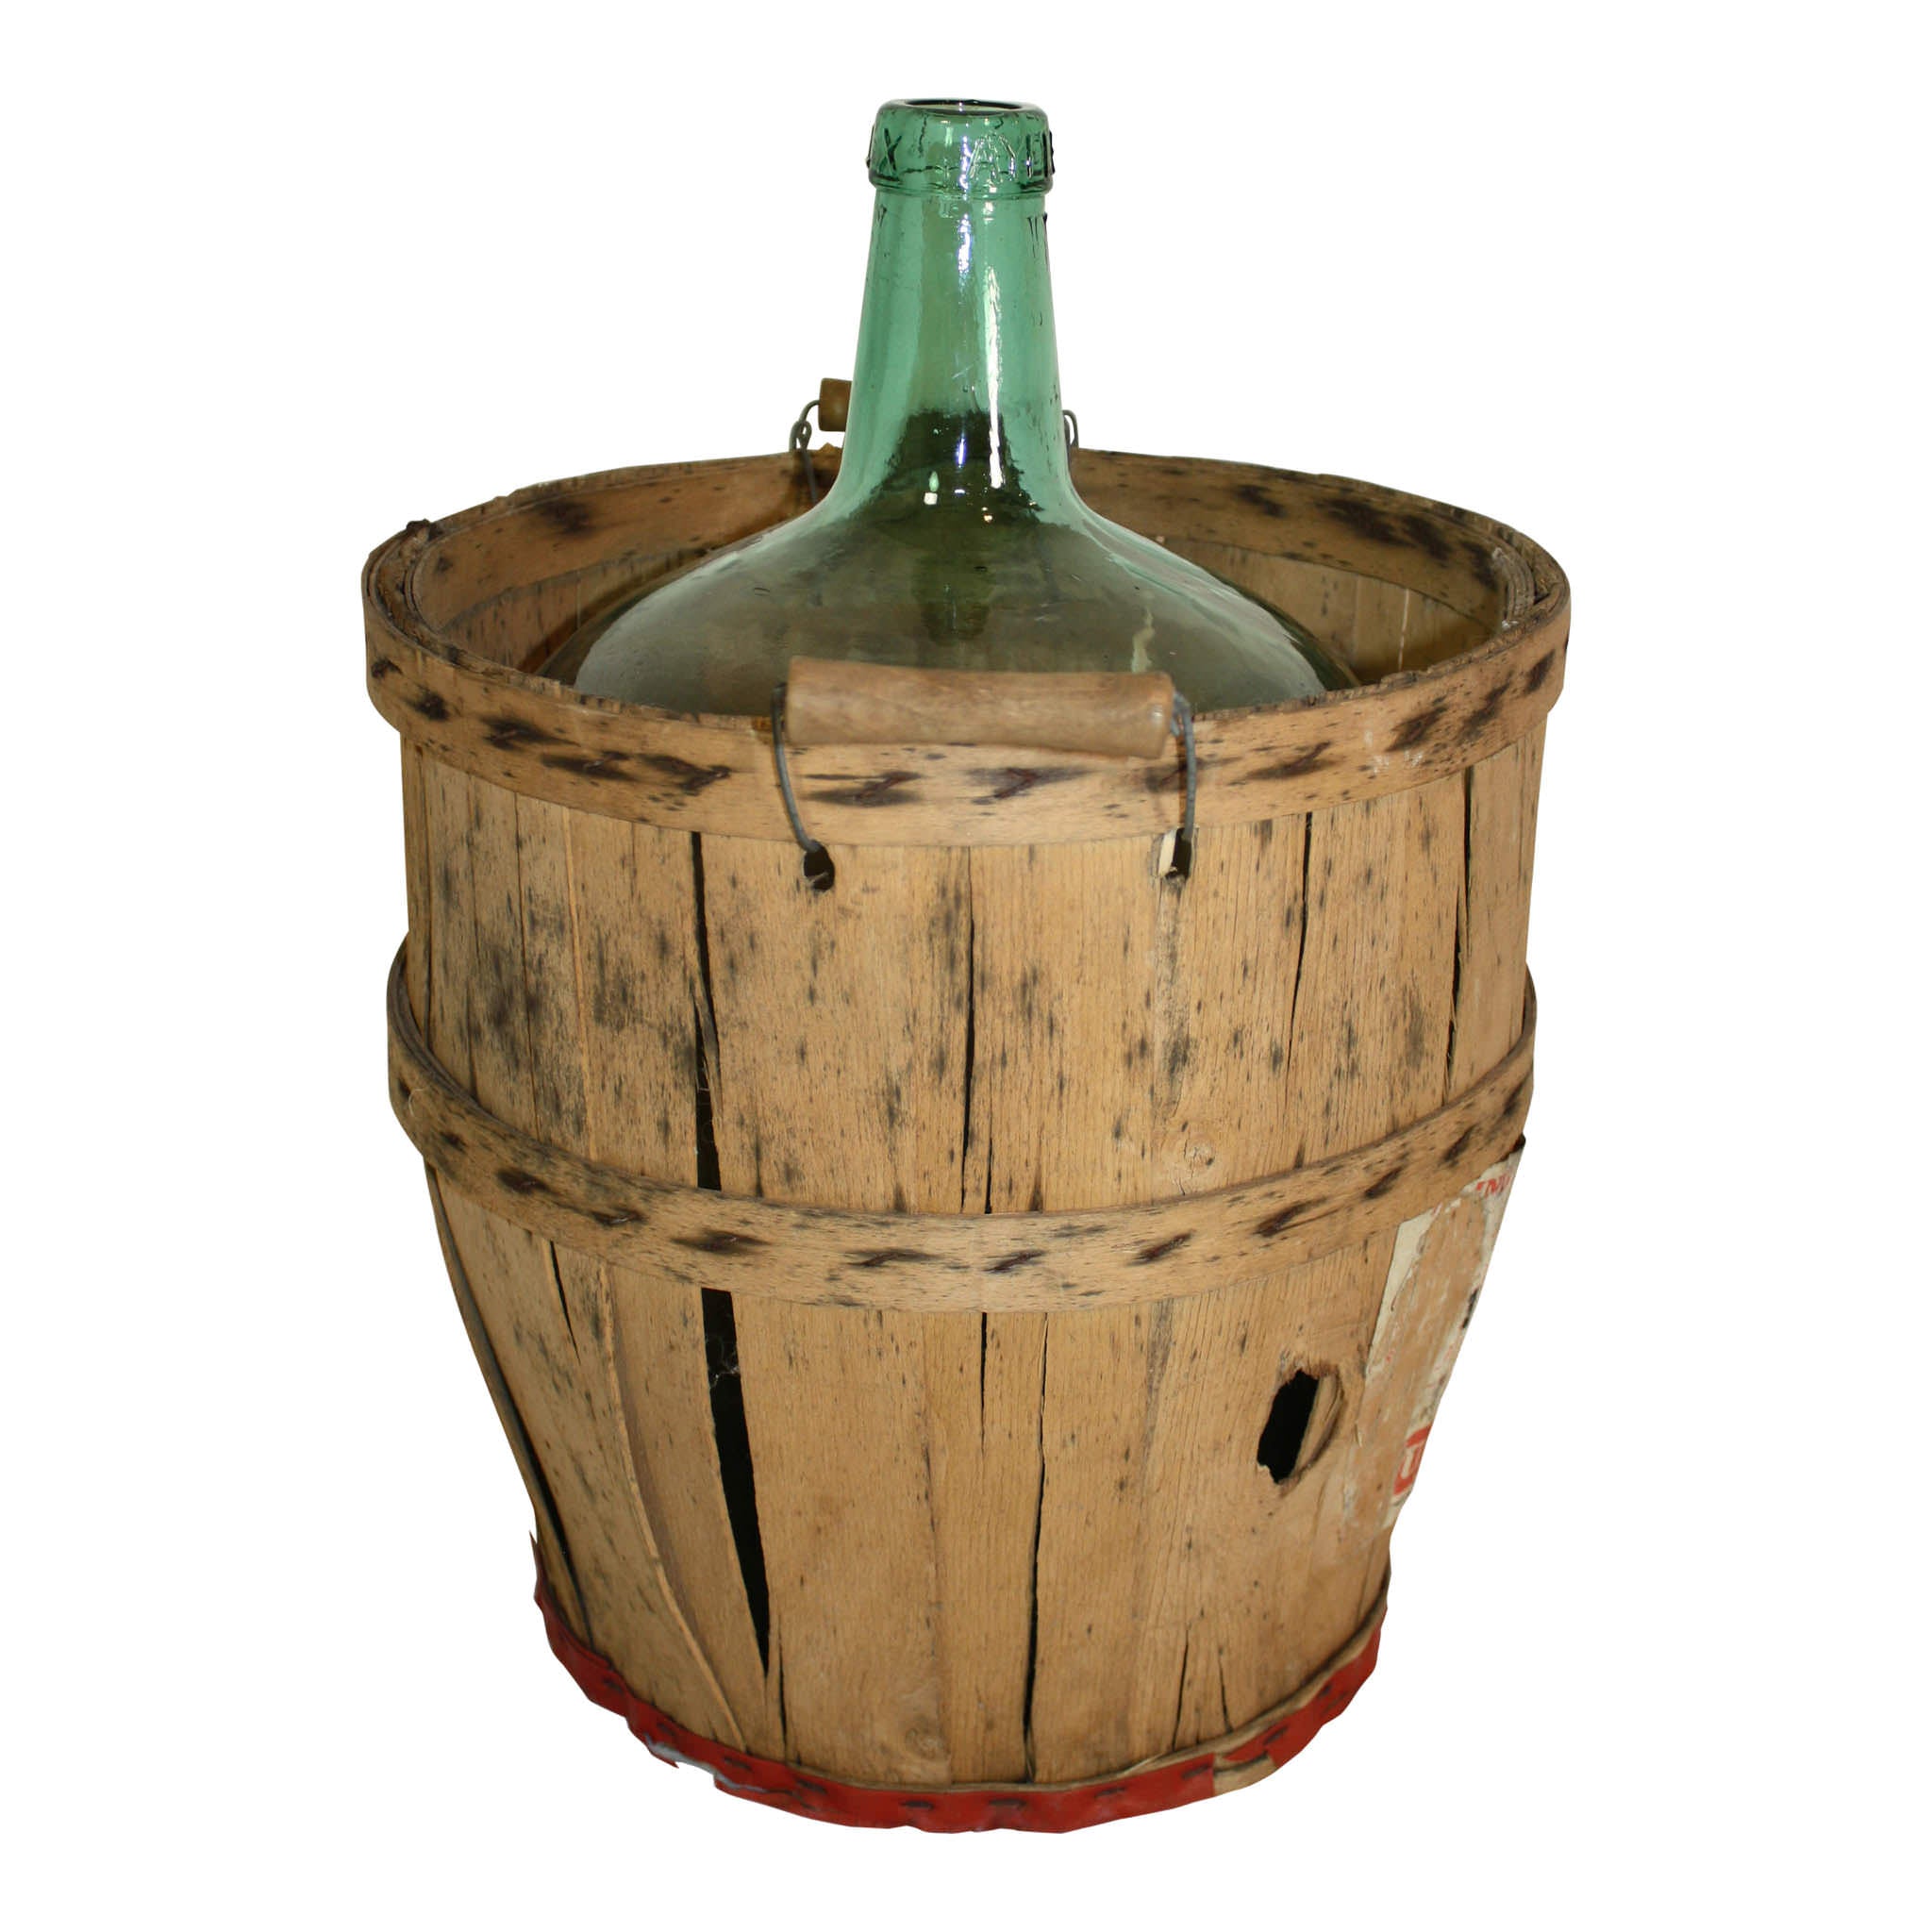 Spanish Wine Bottle in Basket